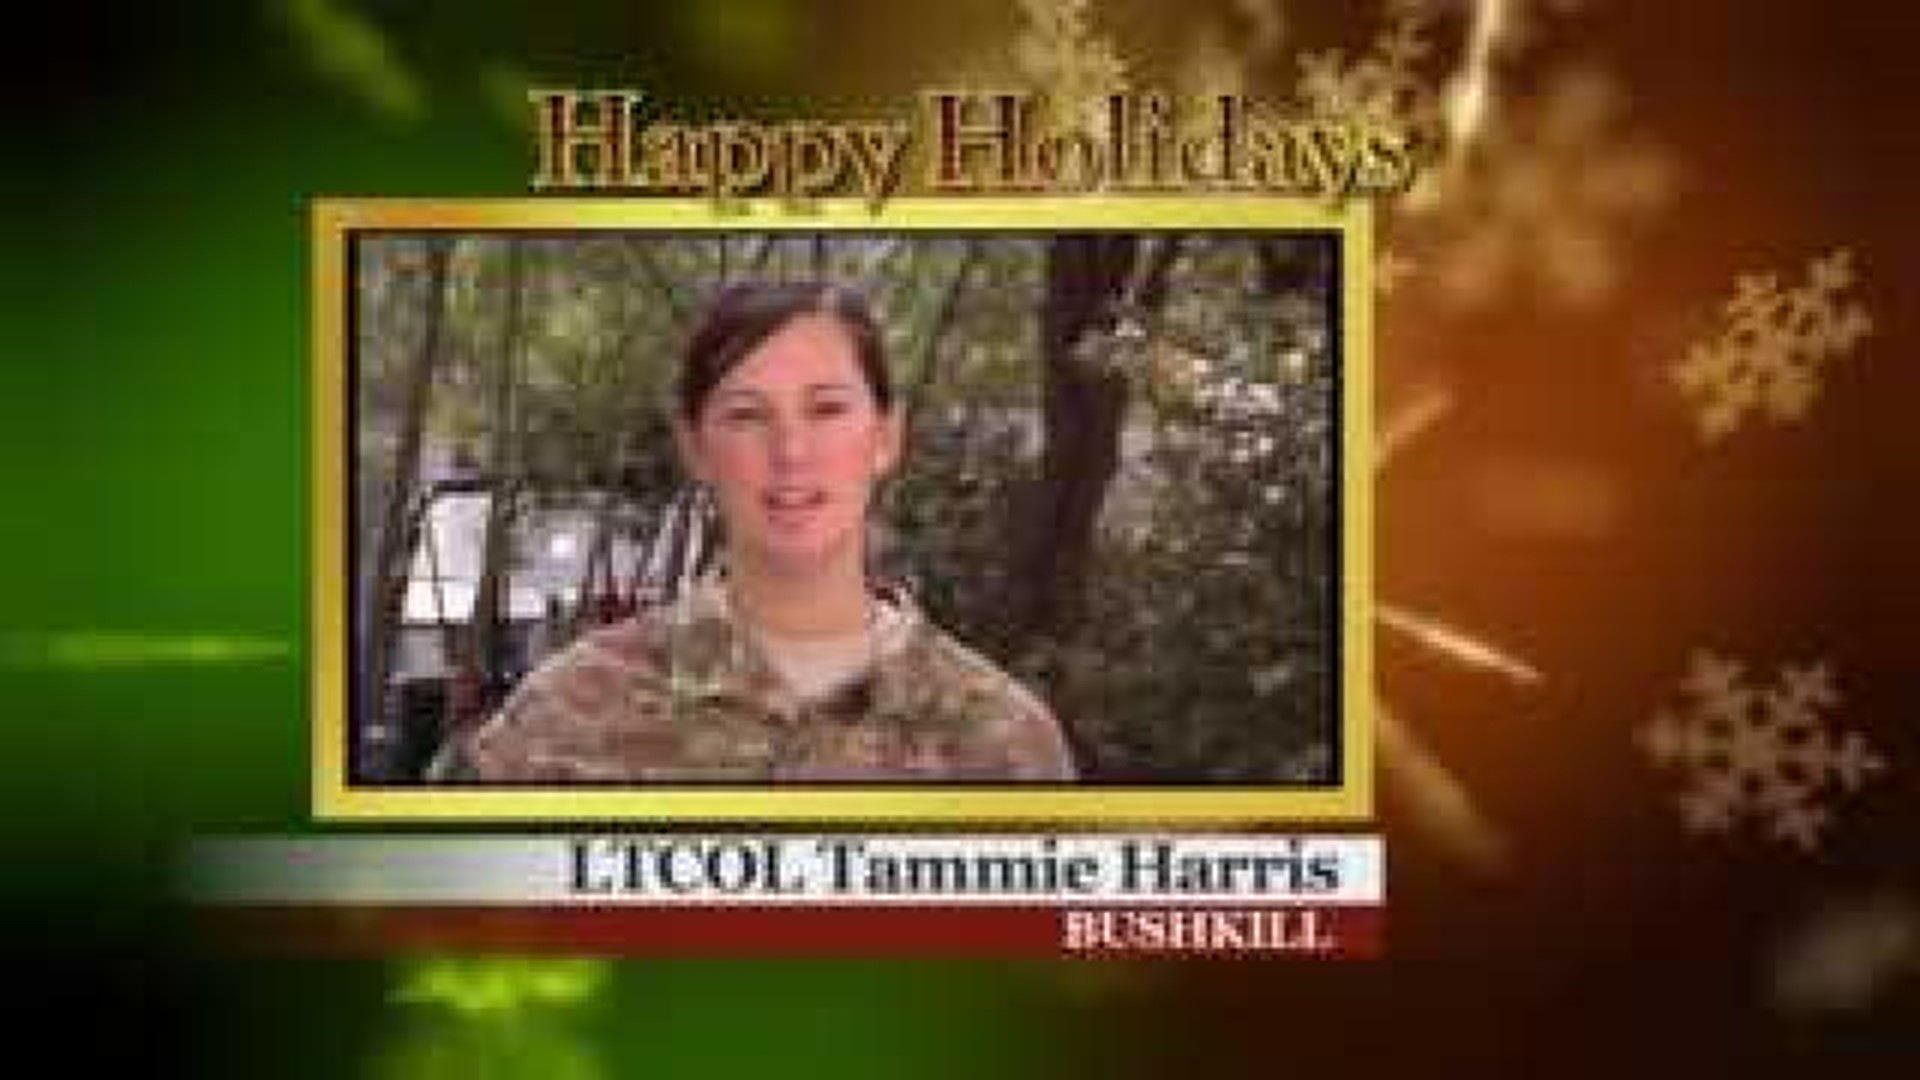 Military Greeting: LTCOL Tammie Harris